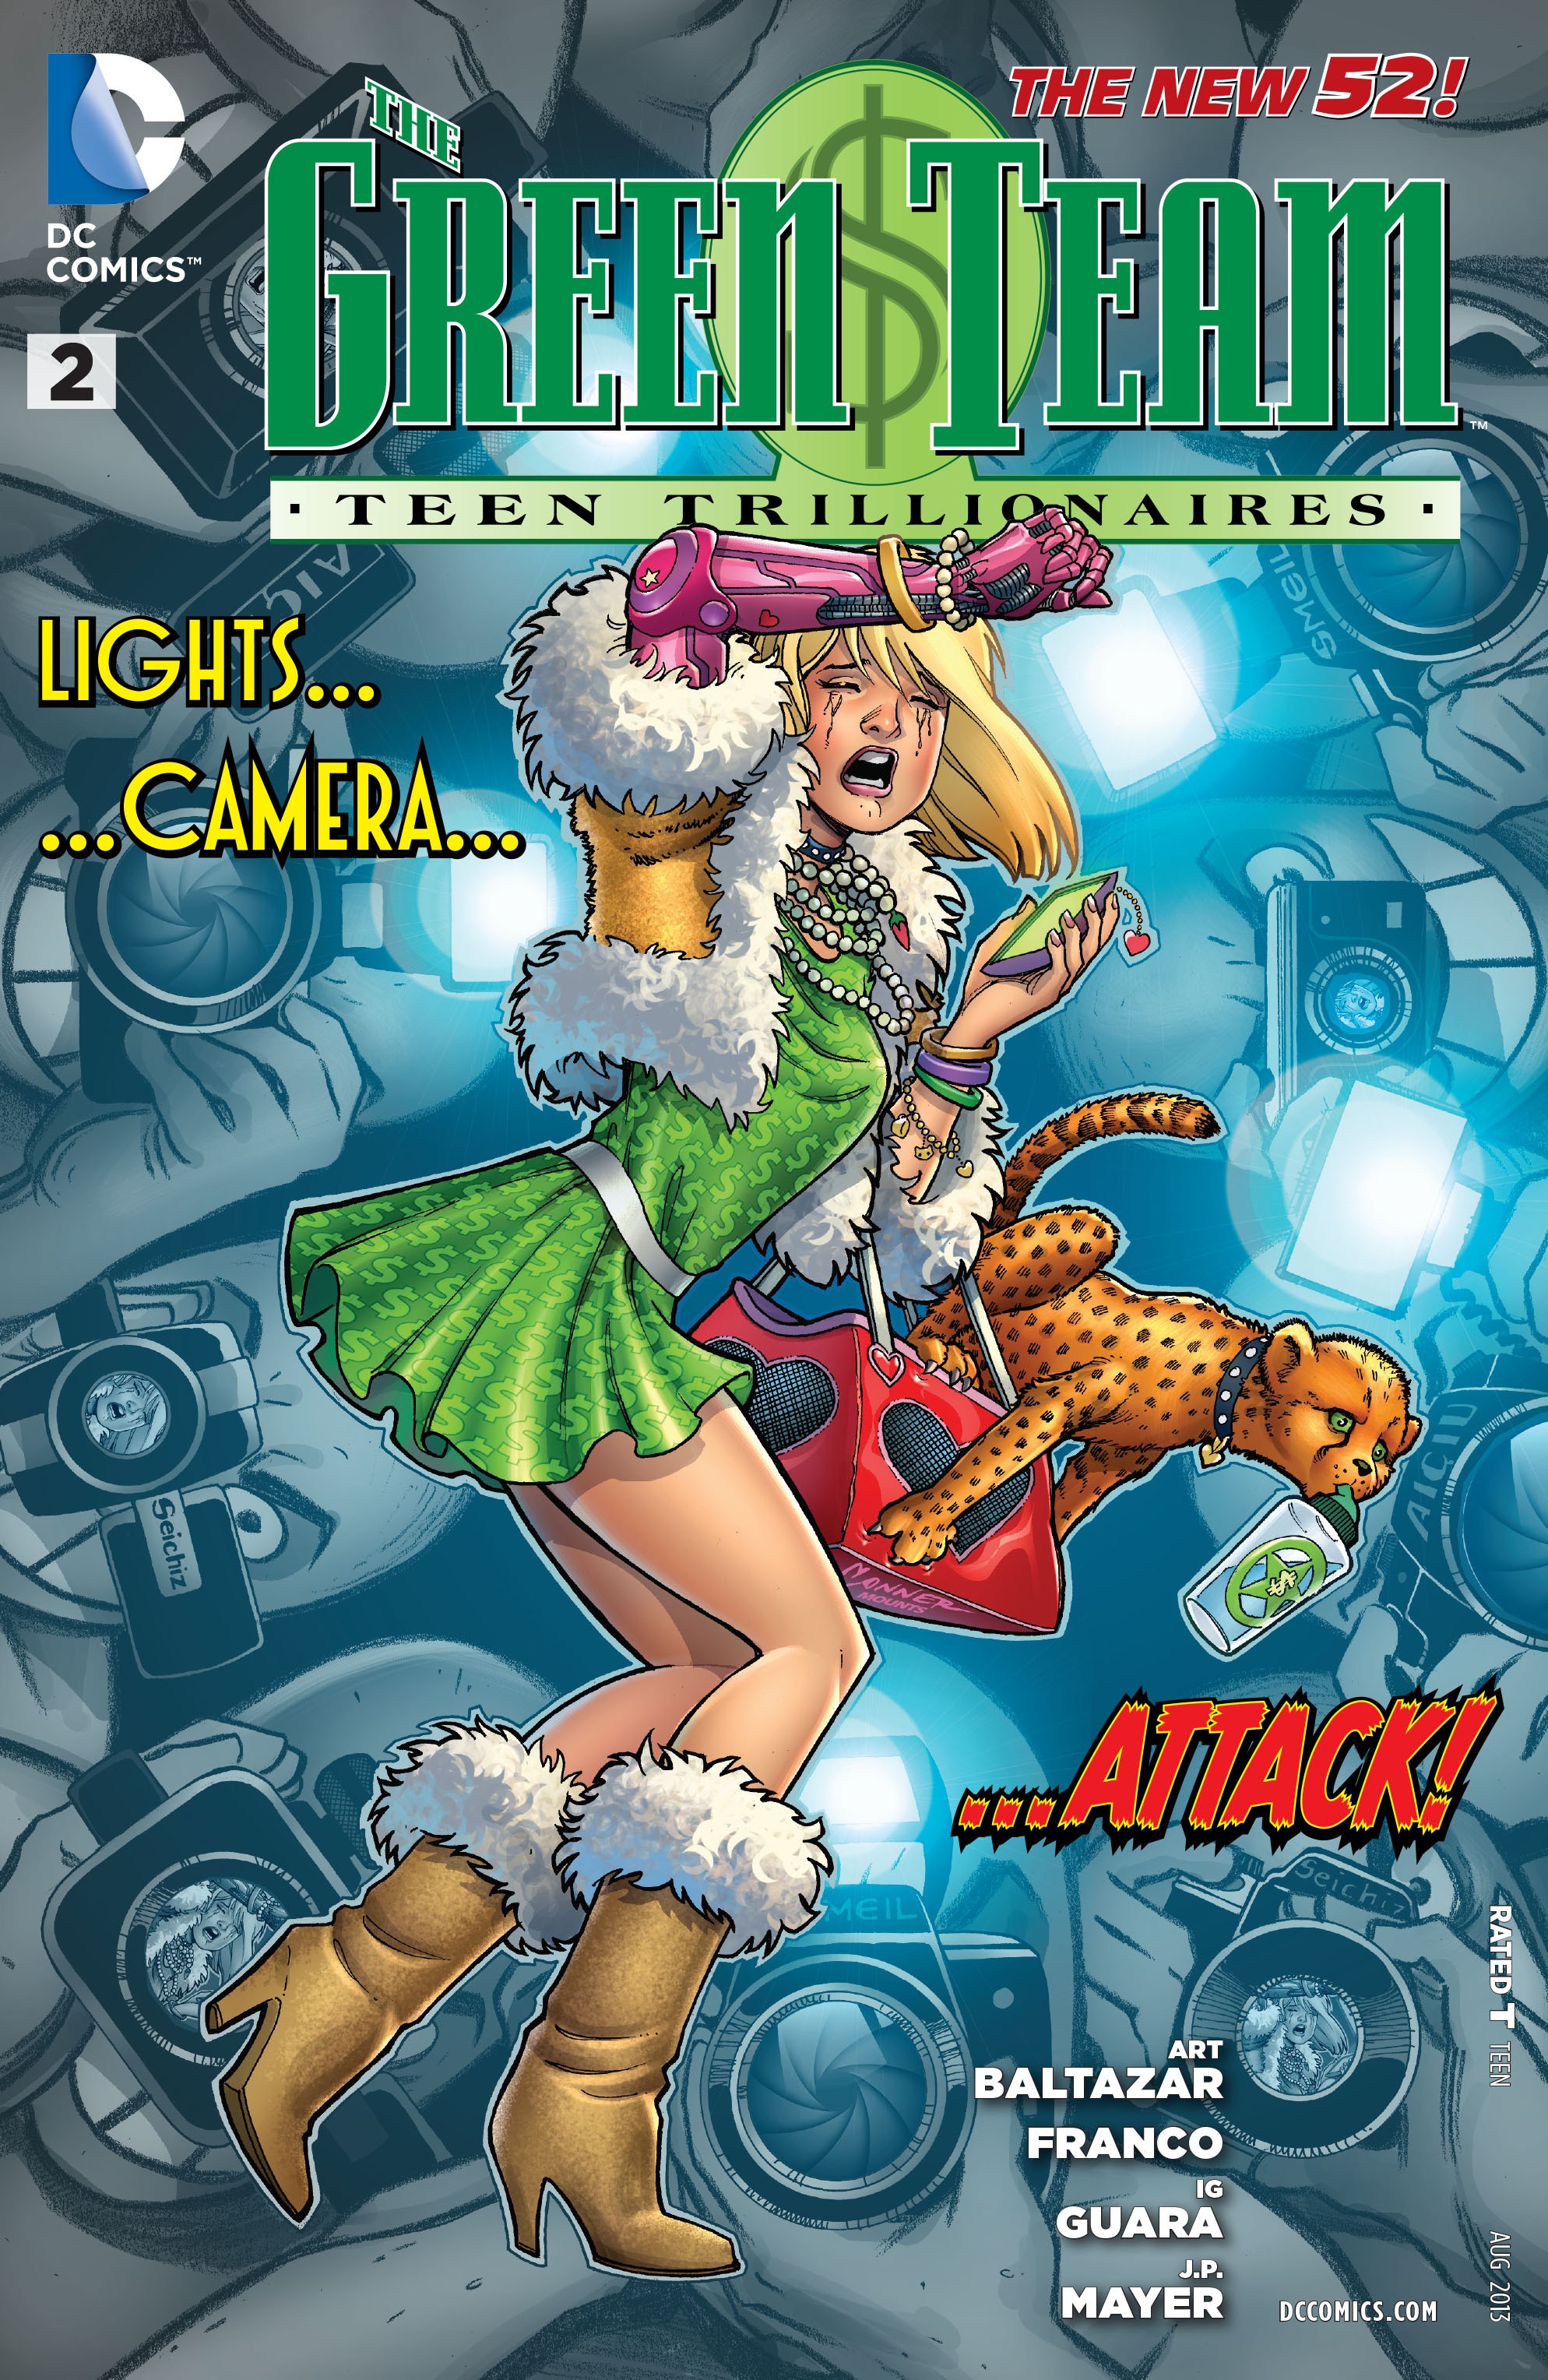 Green Team: Teen Trillionaires Vol. 1 #2